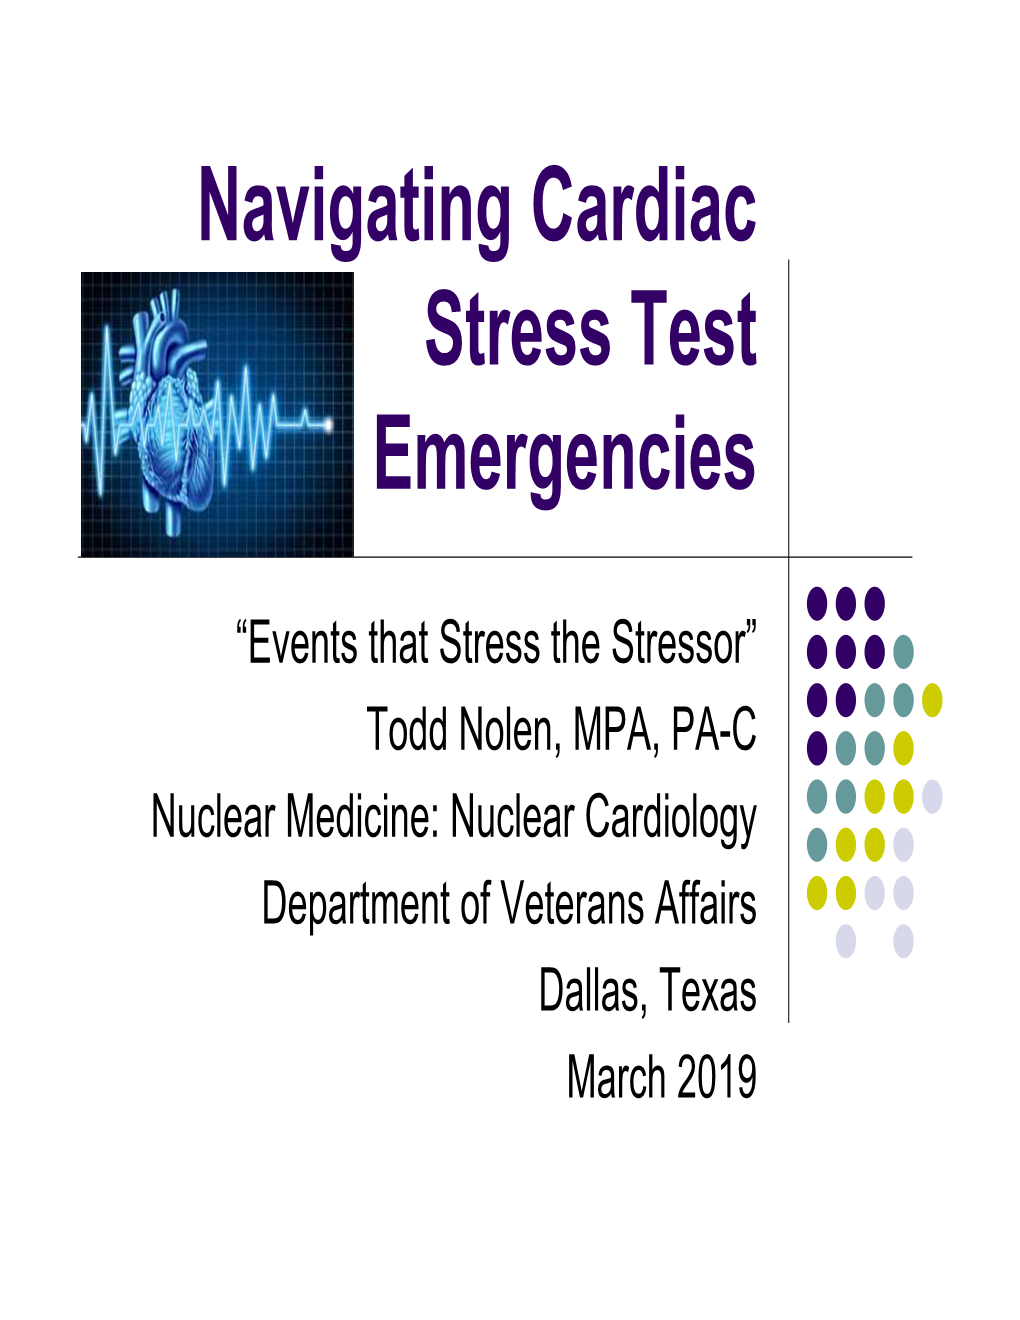 Navigating Cardiac Stress Test Emergencies